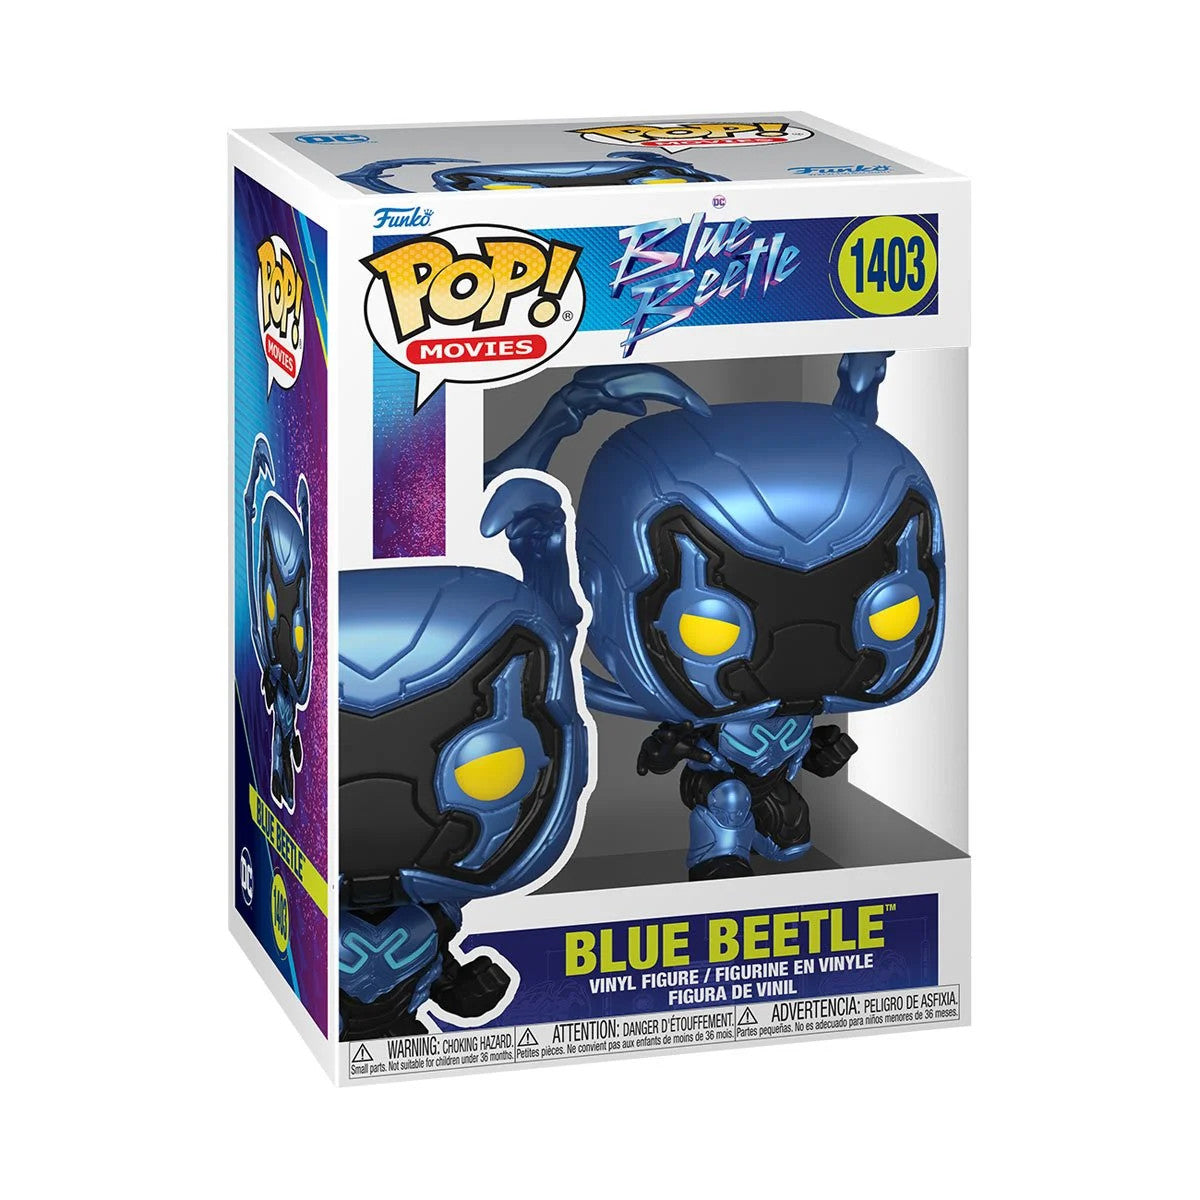 Blue Beetle Funko Pop! Vinyl Figure #1403